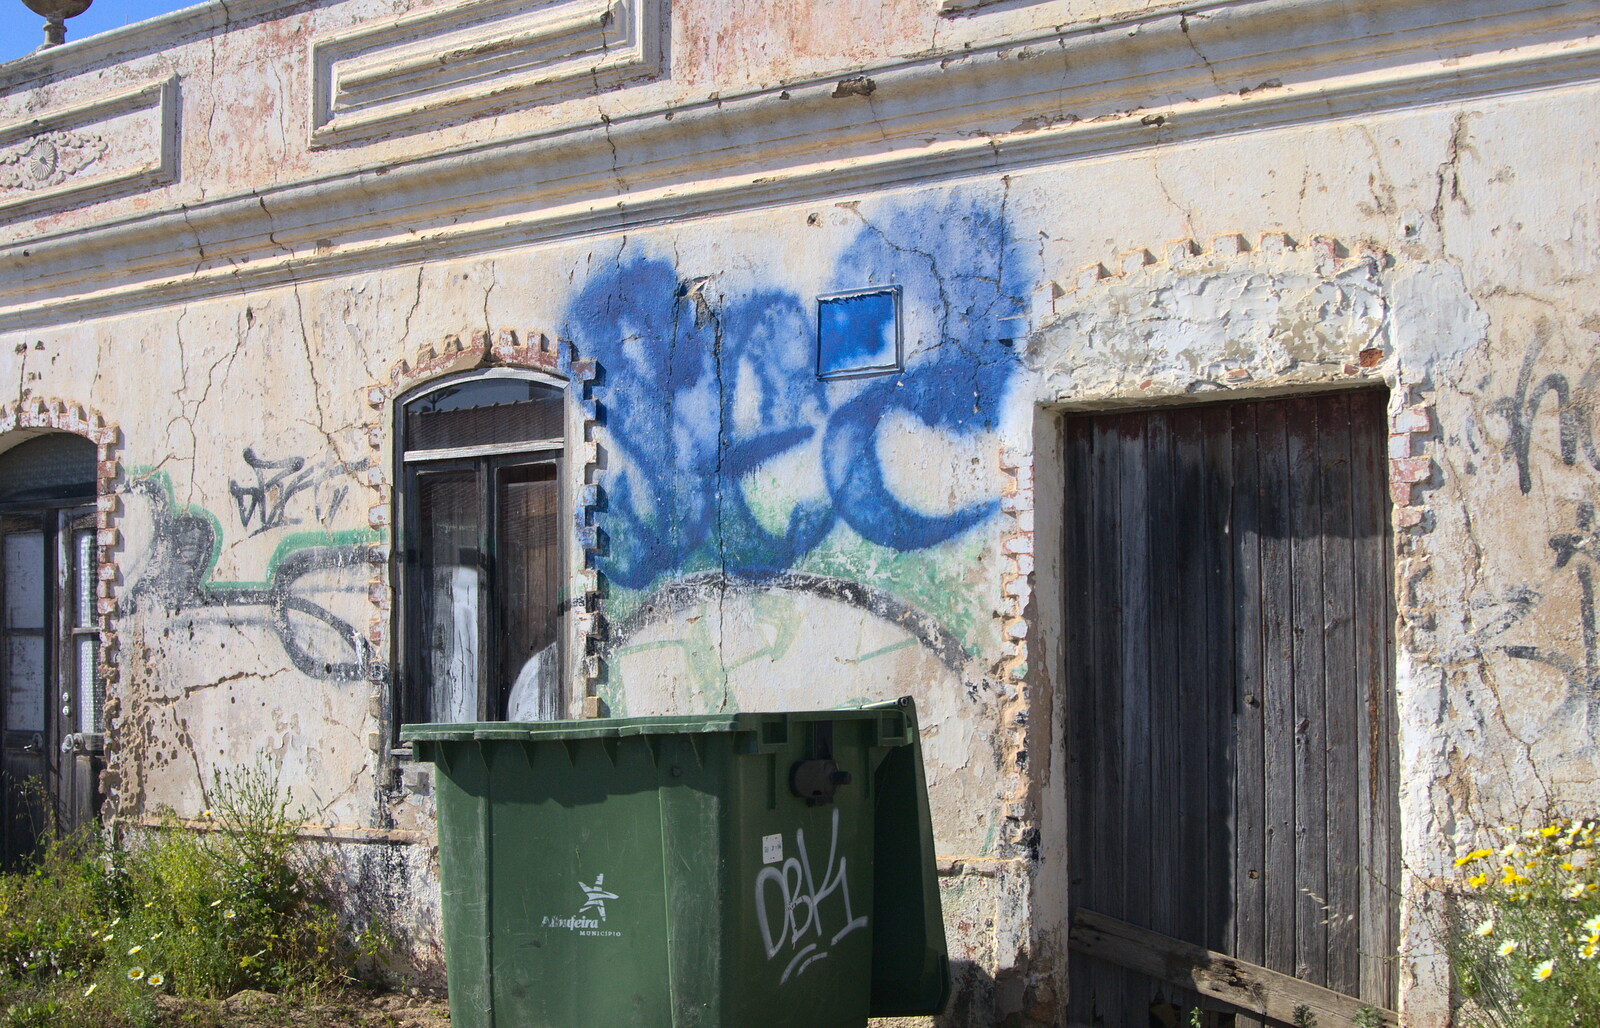 Graffiti and wheelie bins from Gary and Vanessa's Barbeque, Alcantarilha, Algarve, Portugal - 7th April 2016